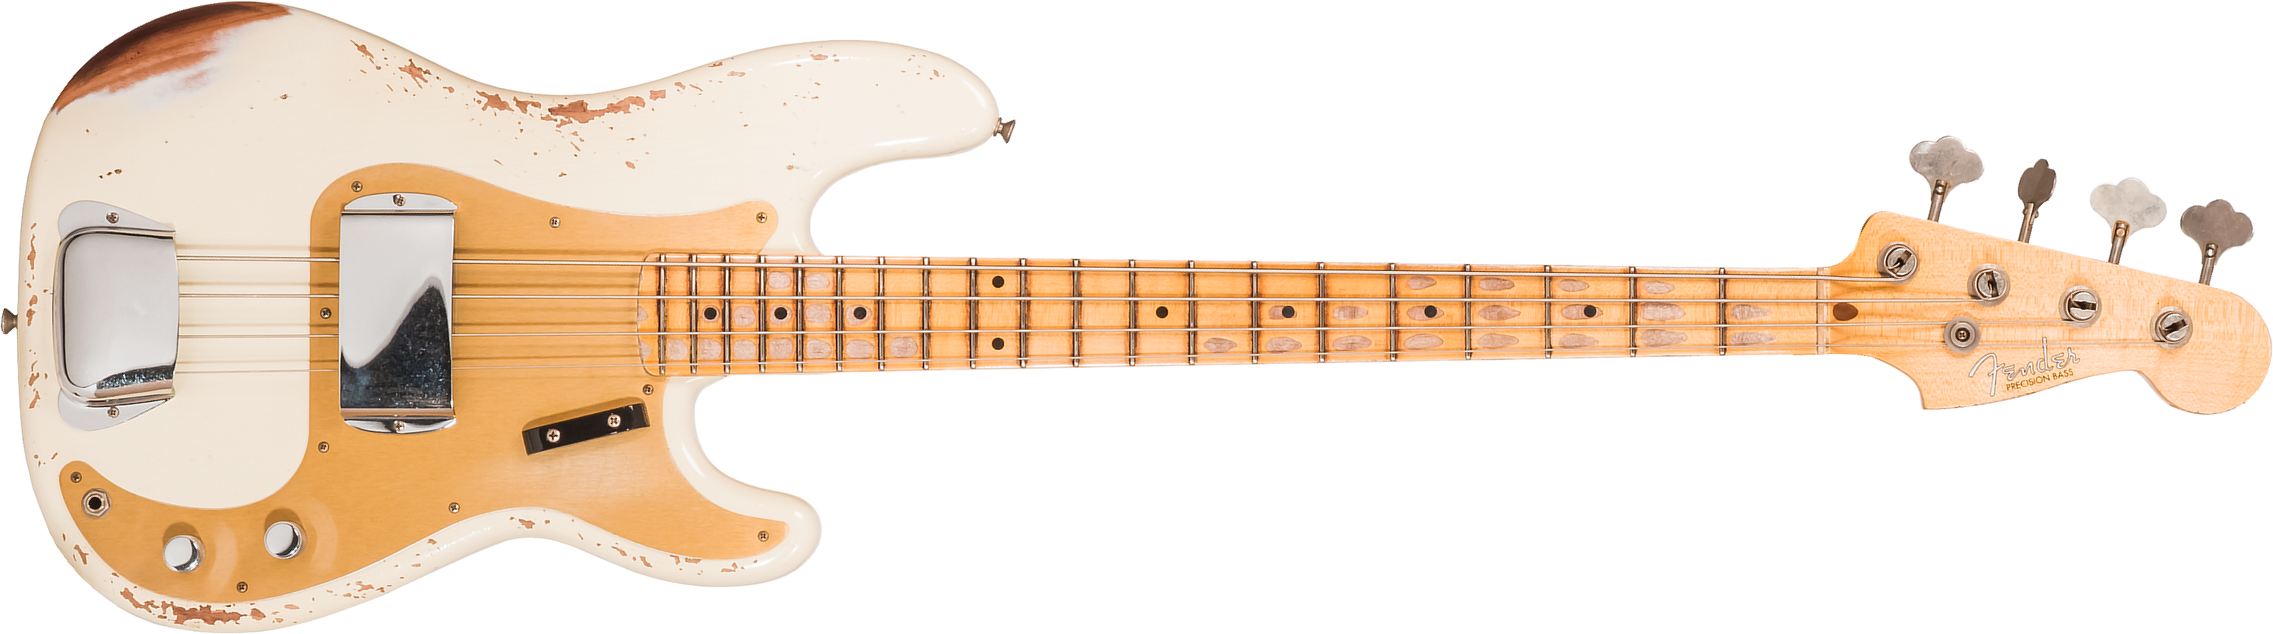 Fender Custom Shop Precision Bass 1958 Mn #cz569181 - Heavy Relic Vintage White - Solid body elektrische bas - Main picture